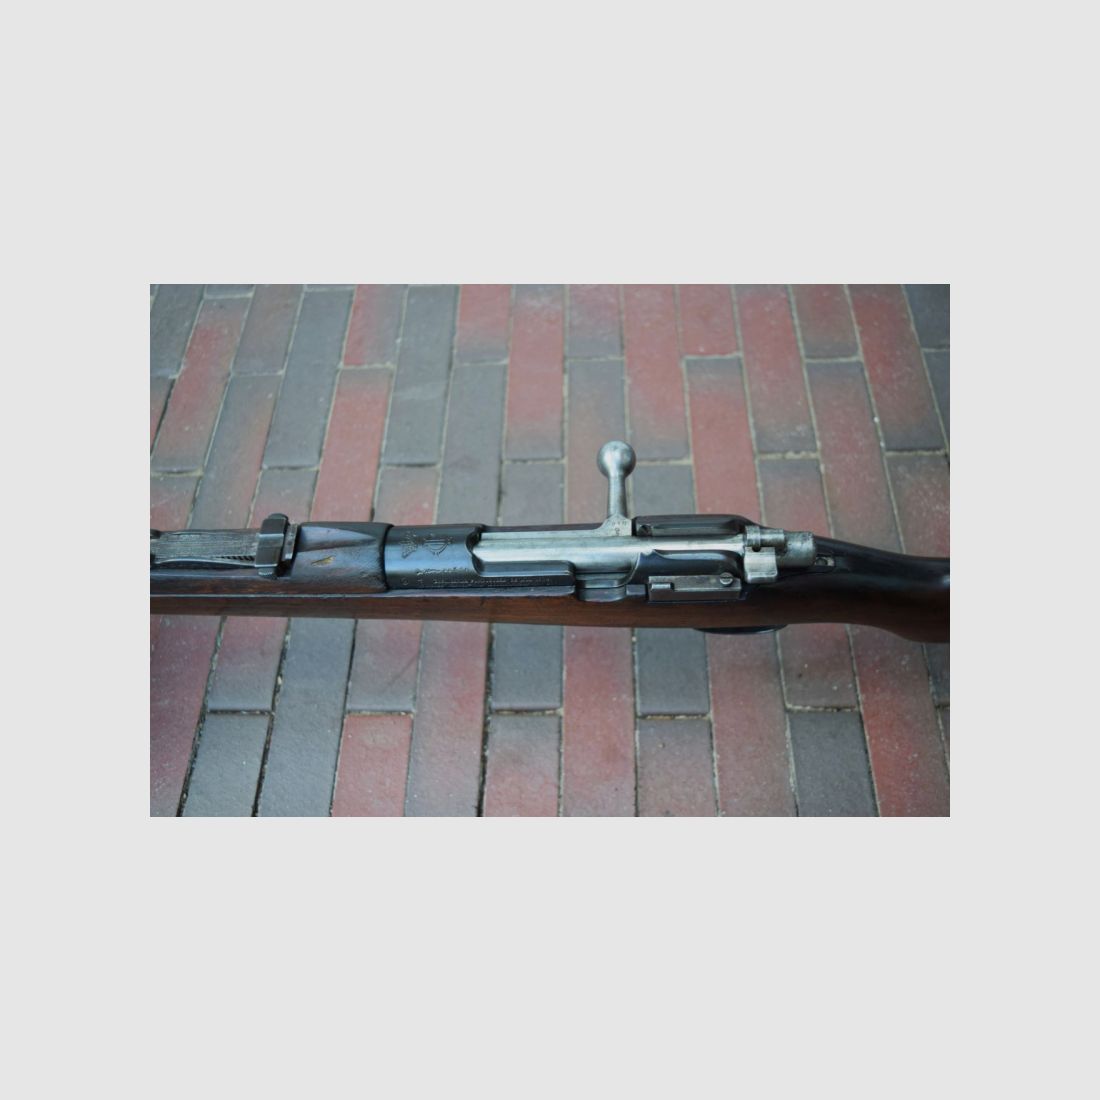 Portugal Mauser-Vergueiro m/904 "Gewehr" Kal. 6,5 mm Sammlerwaffe